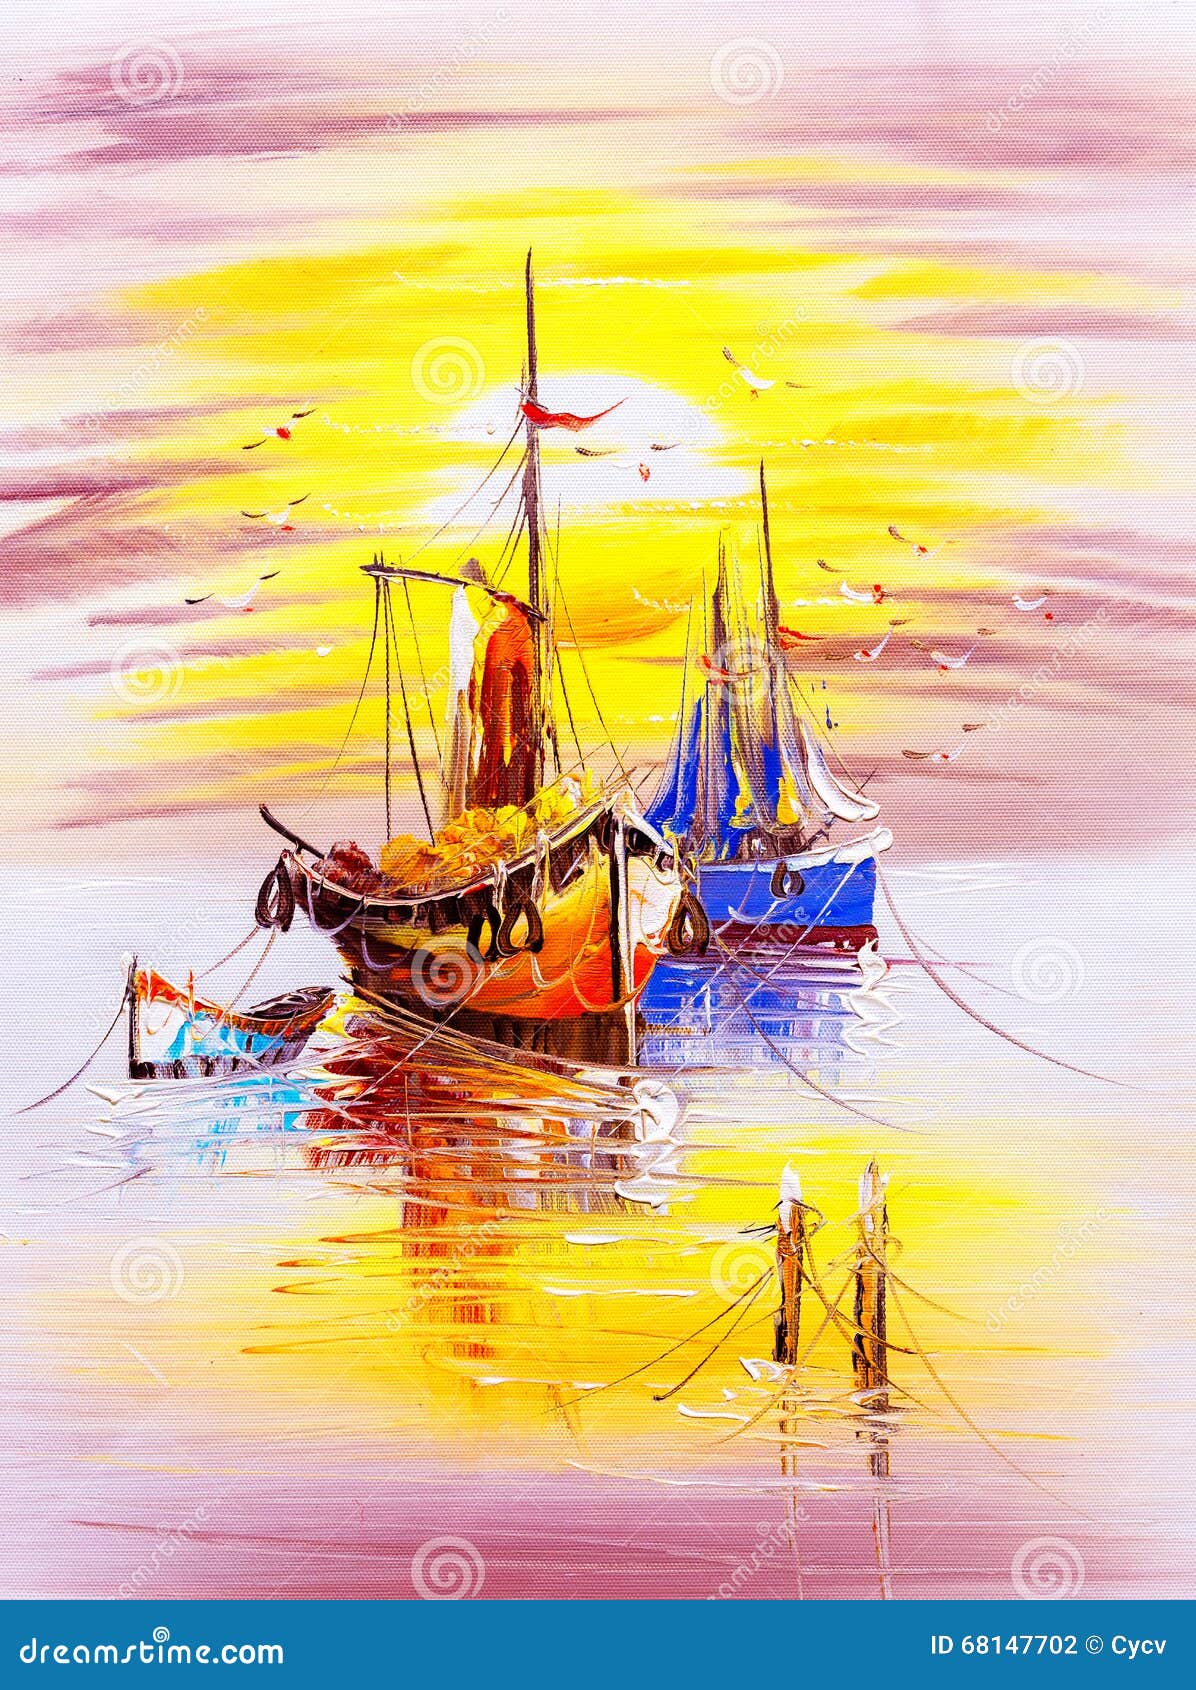 Oil Painting - Boat stock illustration. Illustration of pastel - 68147702